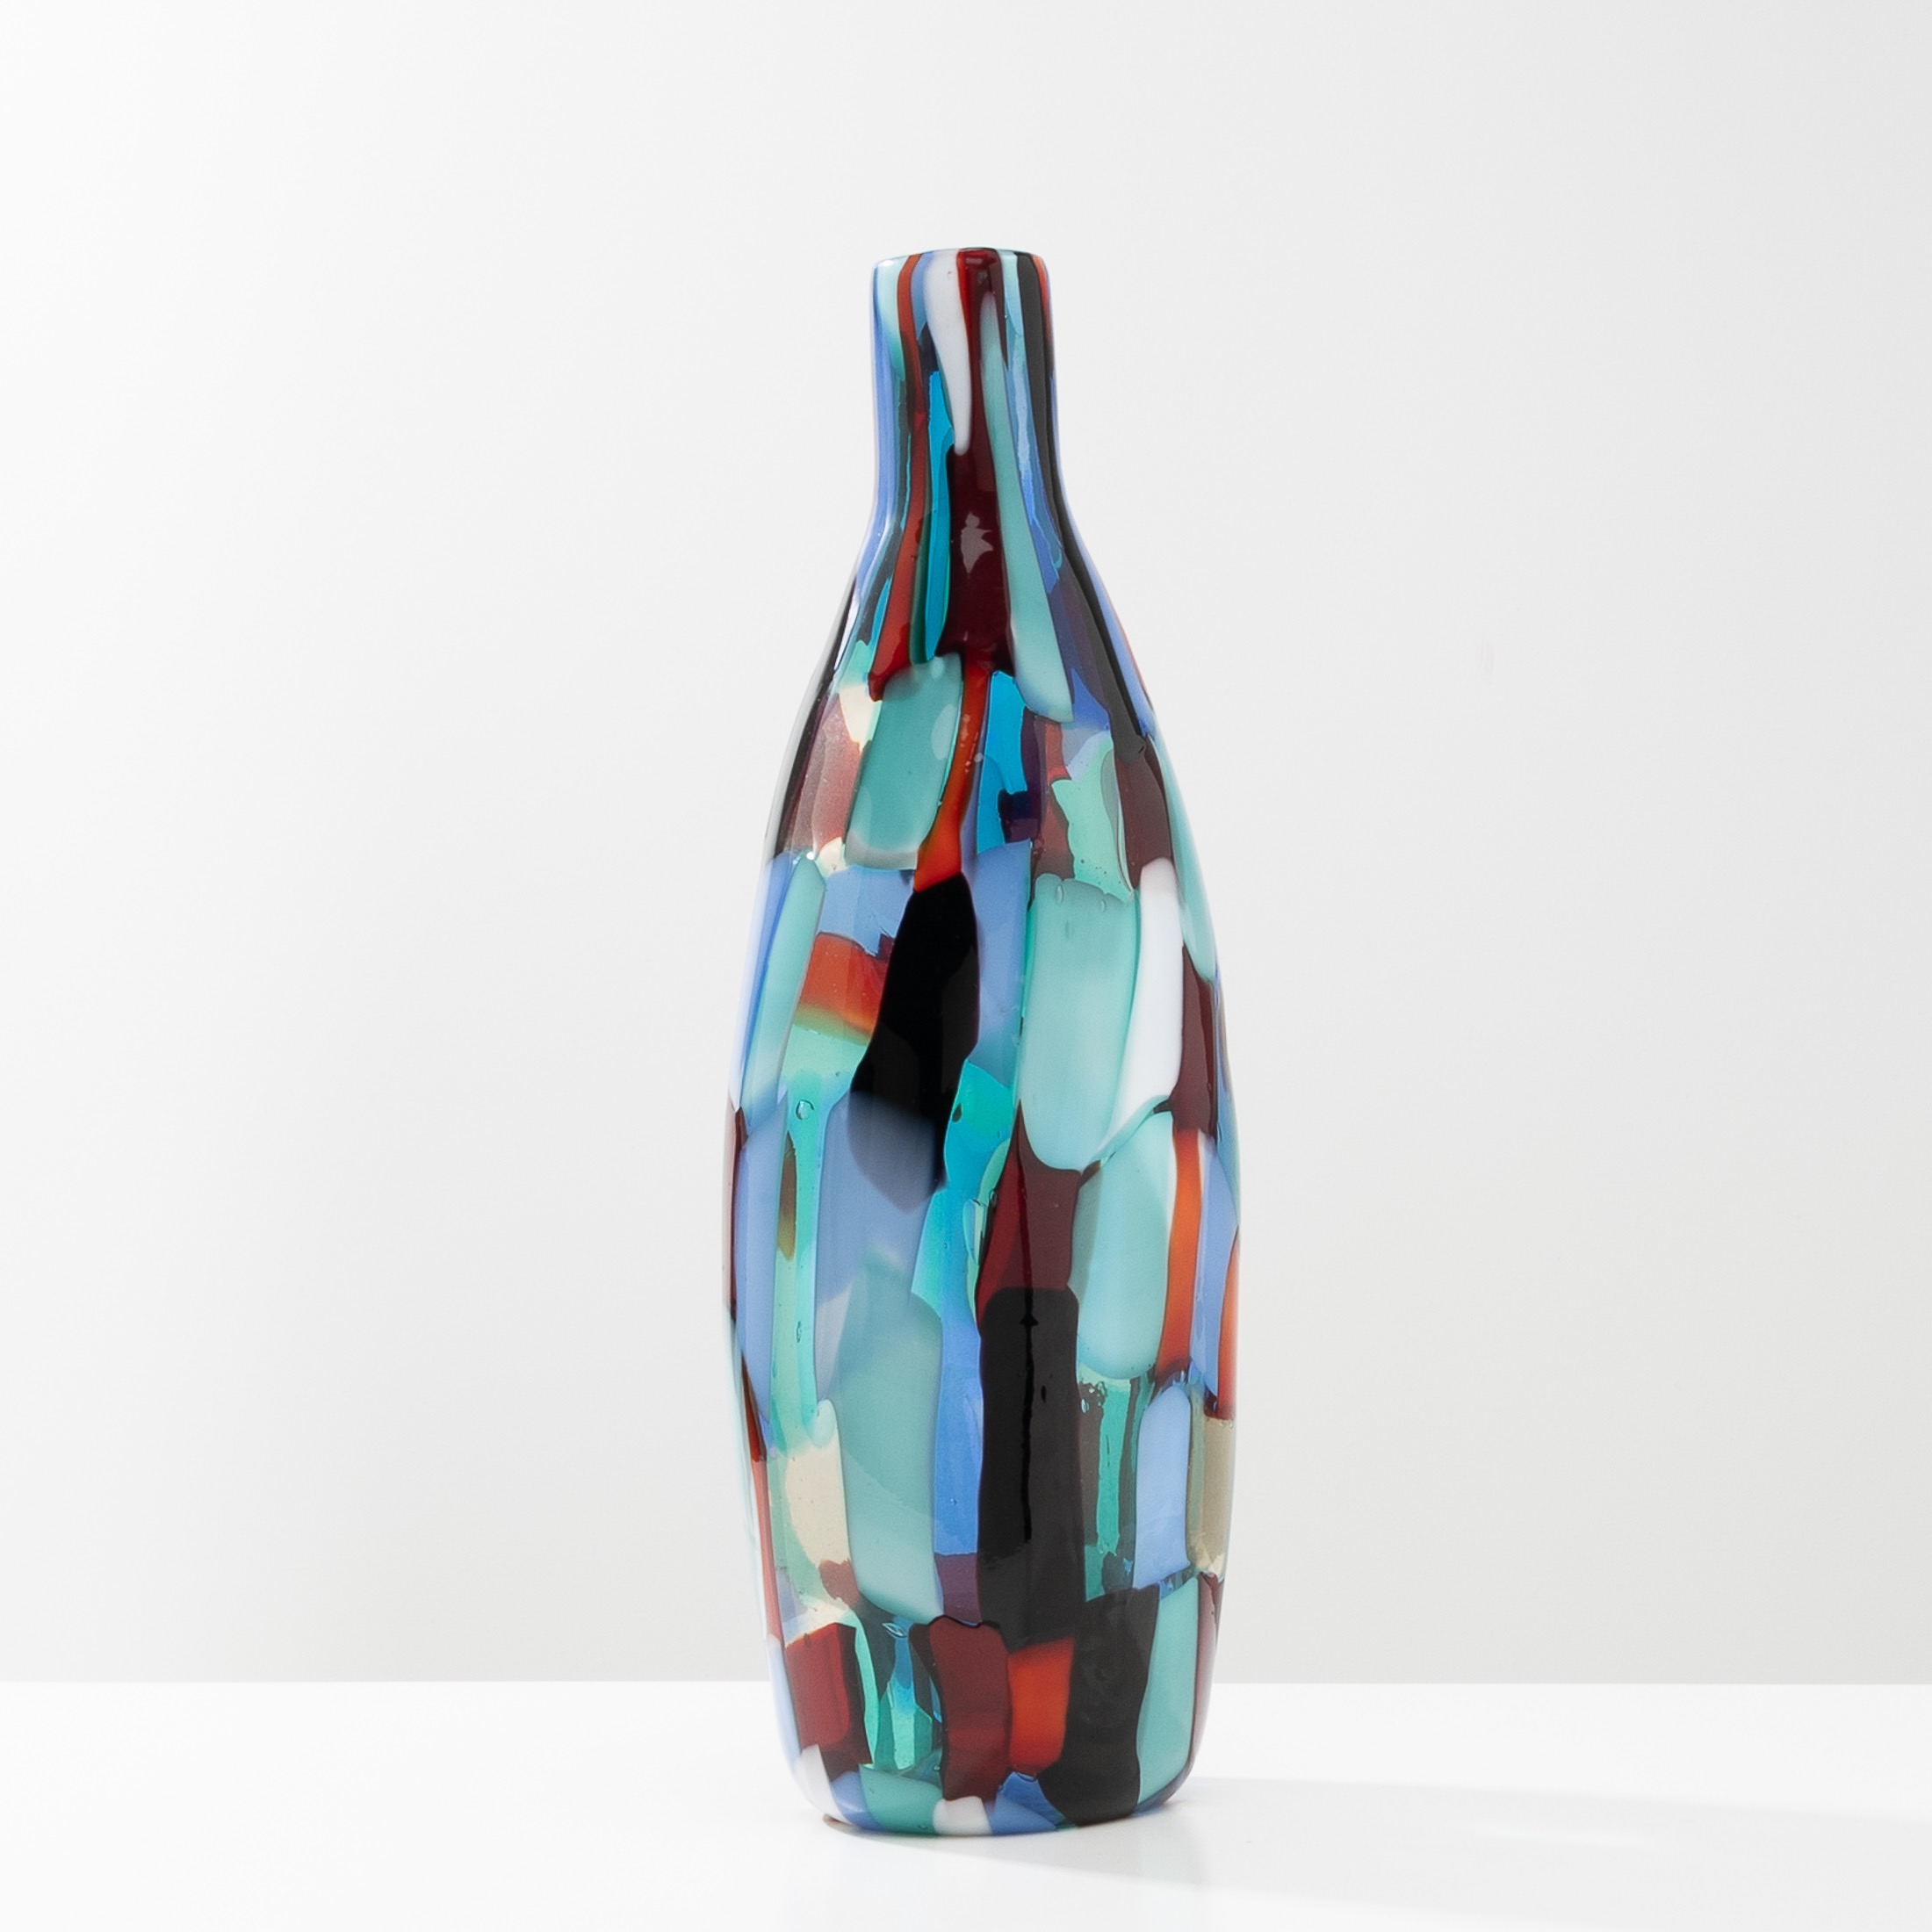 Pezzato arlechino bottle shaped vase by Fulvio Bianconi - model 4319 - Venini Murano - Italy -02